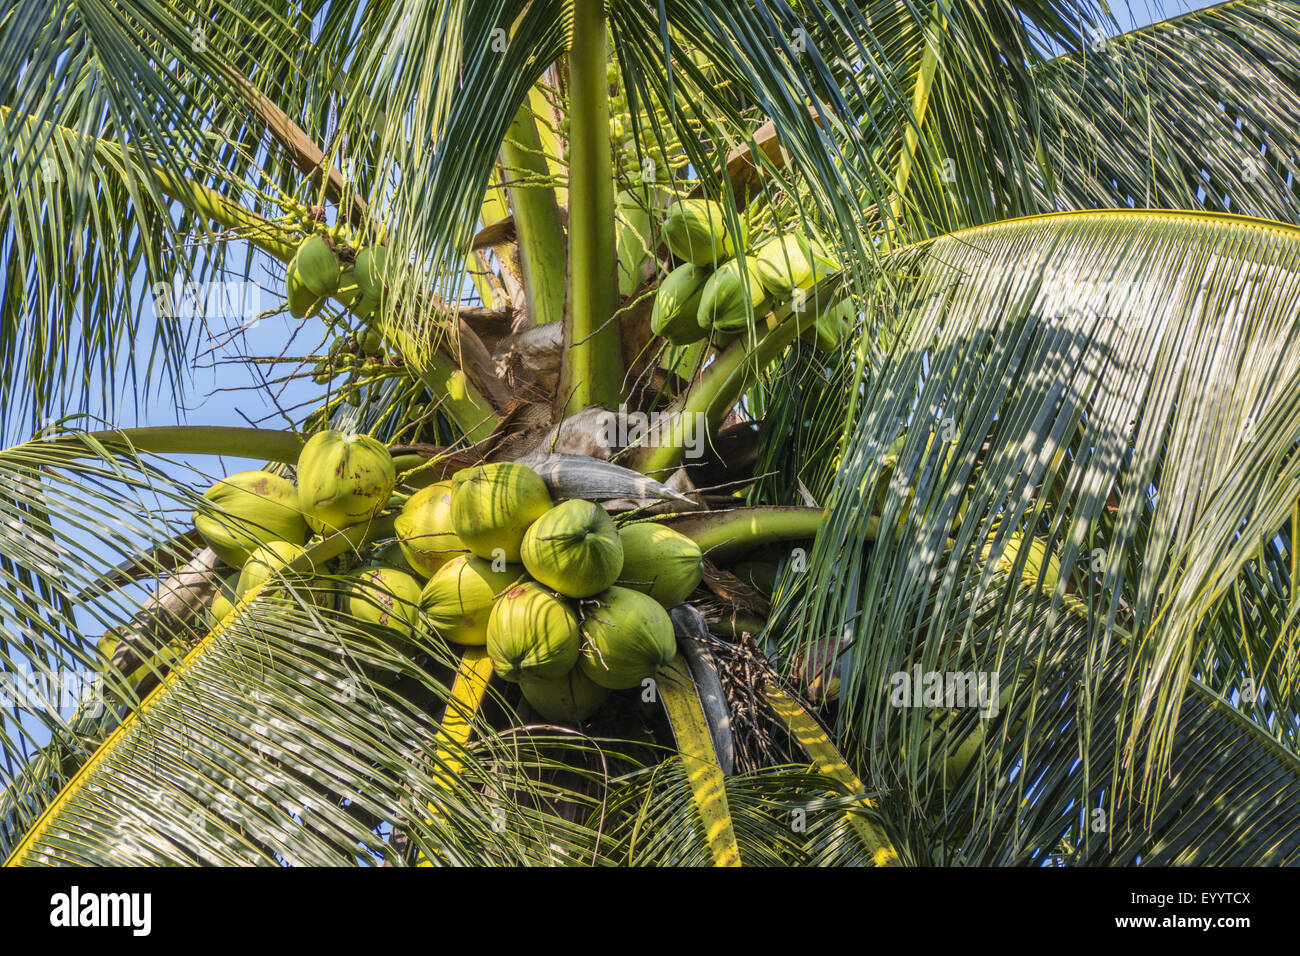 coconut palm (Cocos nucifera), fruits at a palm, Thailand Stock Photo